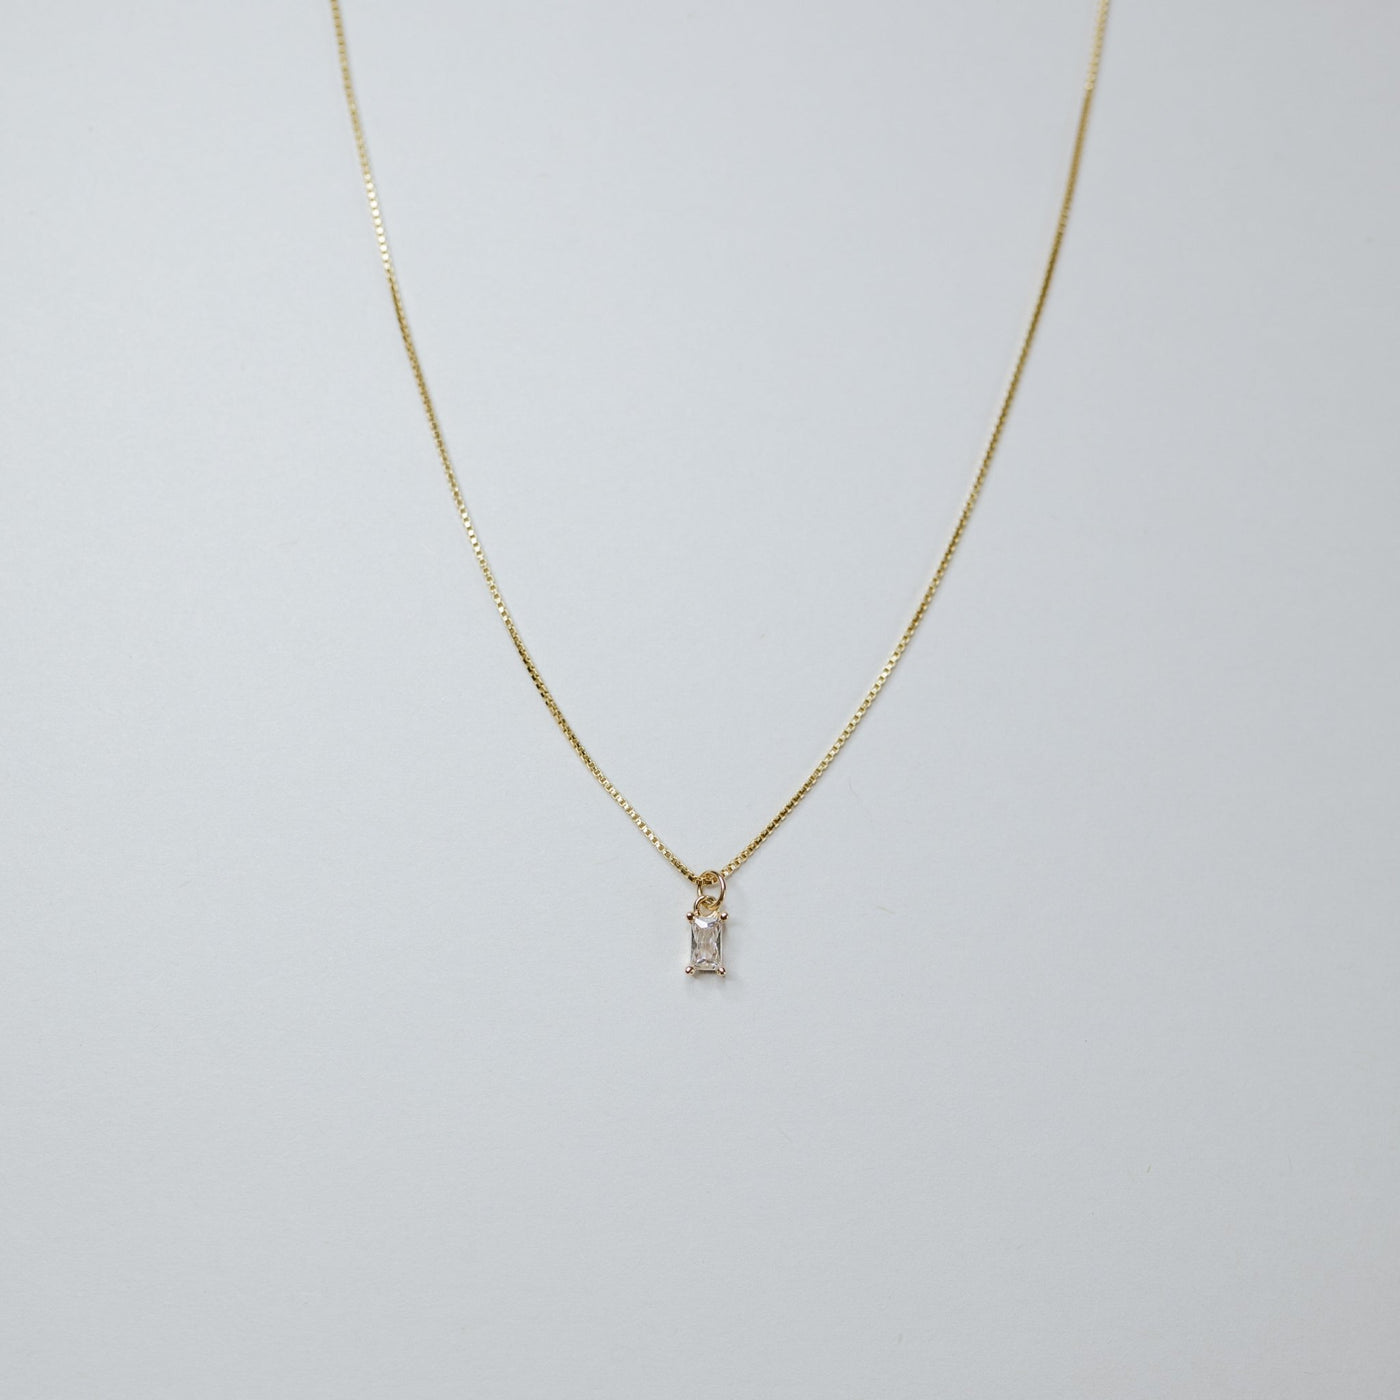 Halstatt Necklace - Jillian Leigh Jewellery - necklaces